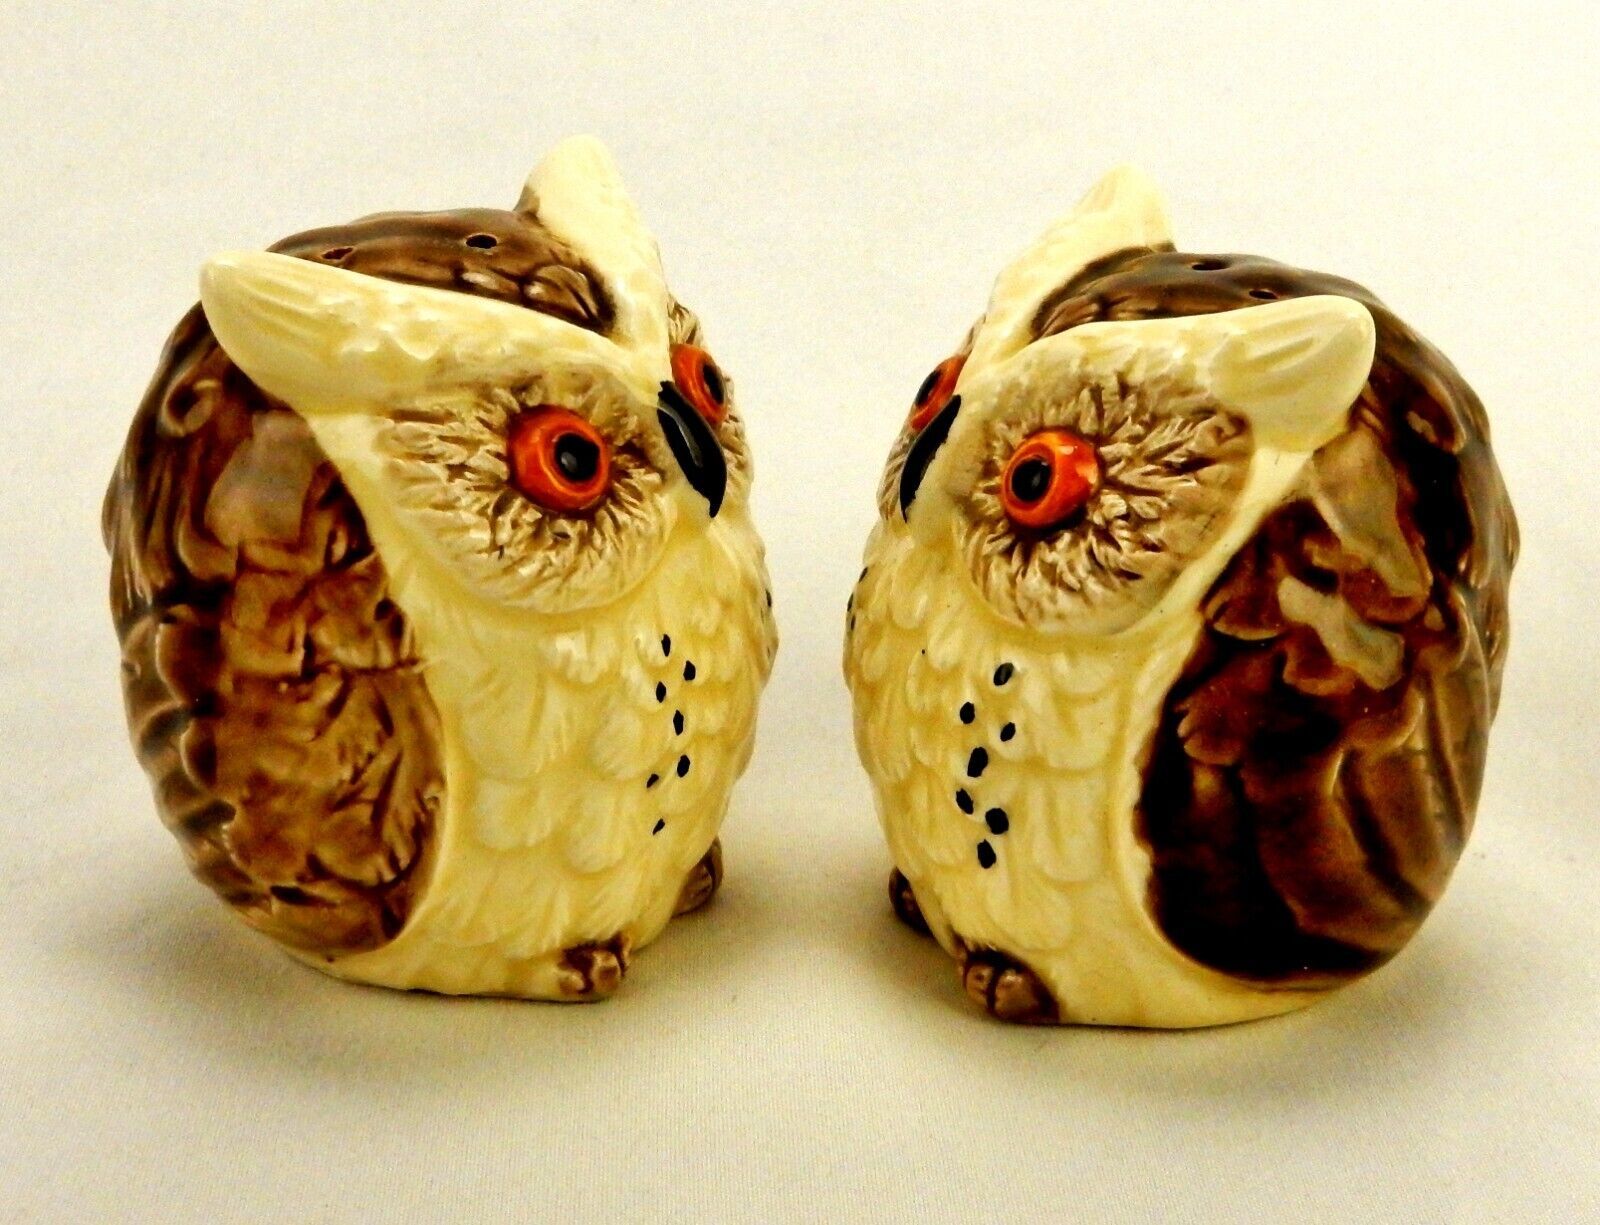 Porcelain Salt & Pepper Shakers, Brown Owls, Vintage 1970s, Enesco, Japan - $14.65